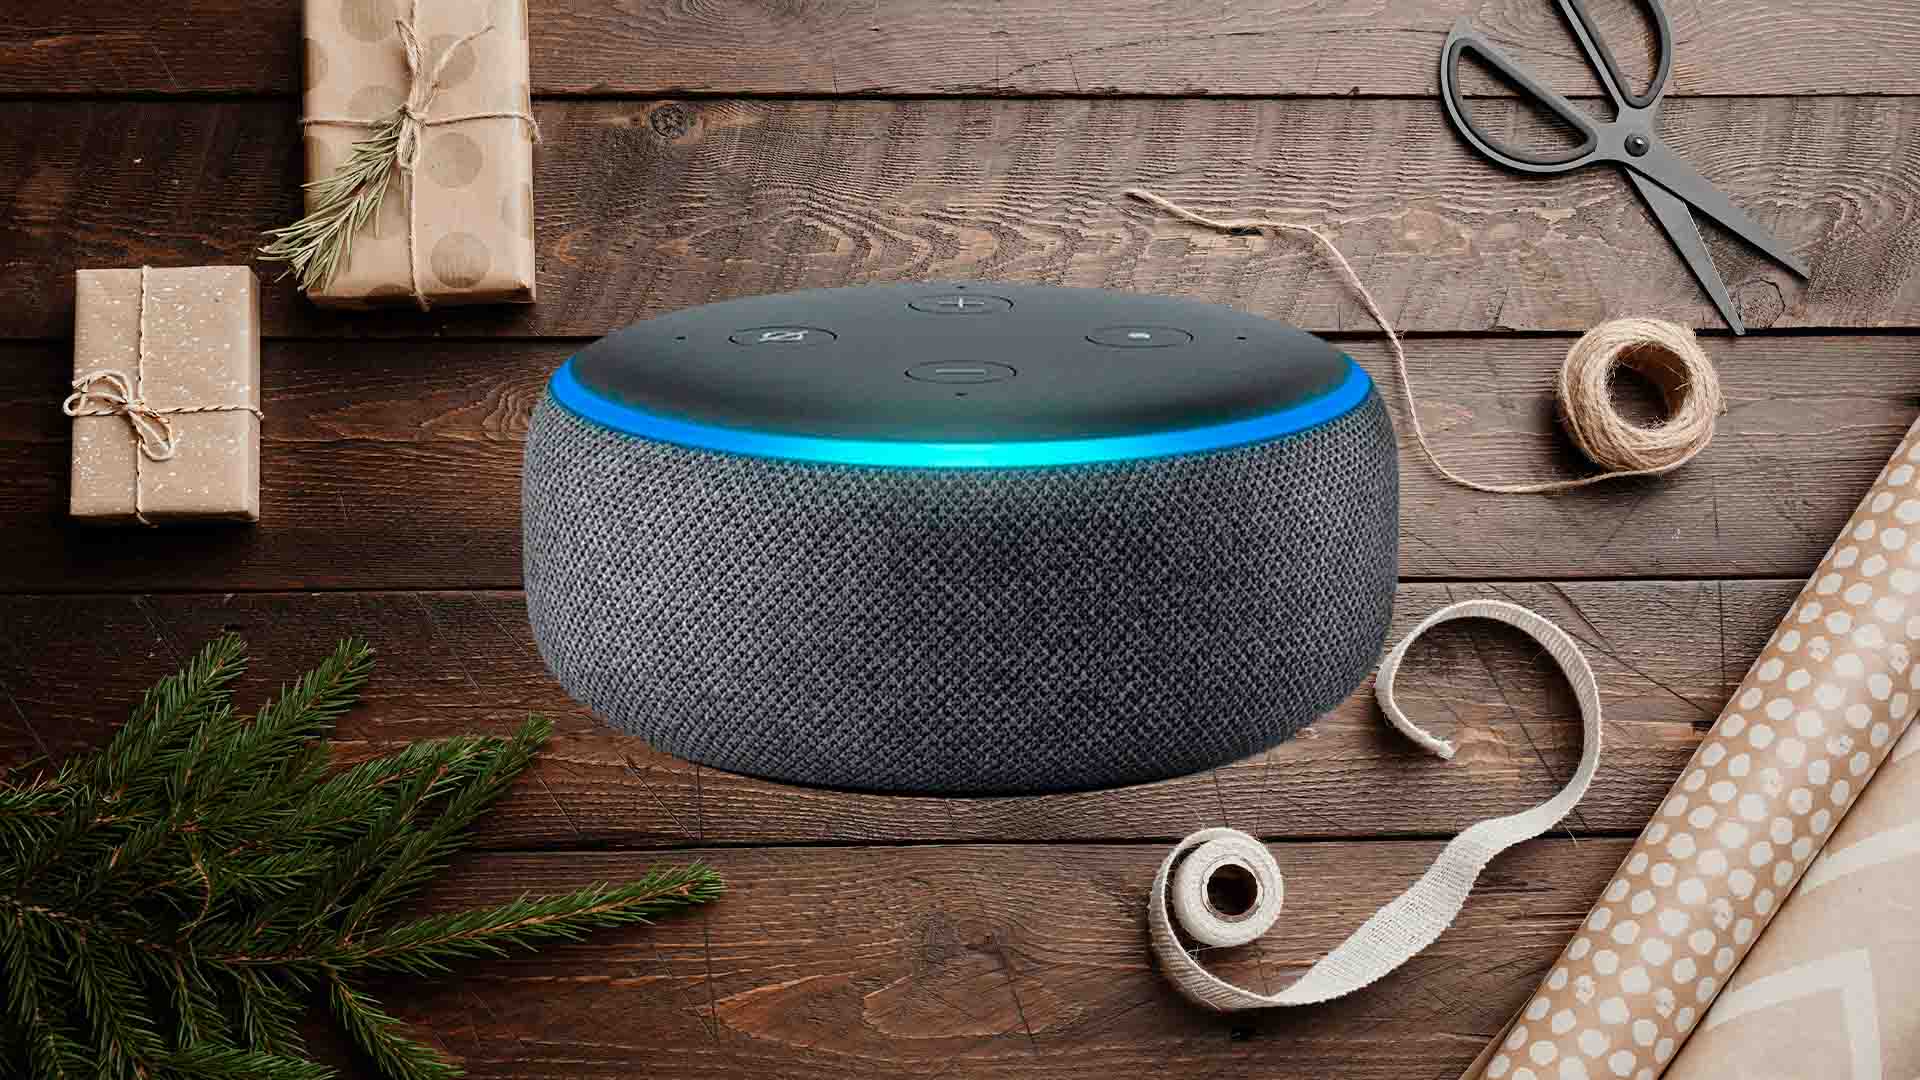 Oferta de Navidad de última hora para Echo Dot 3